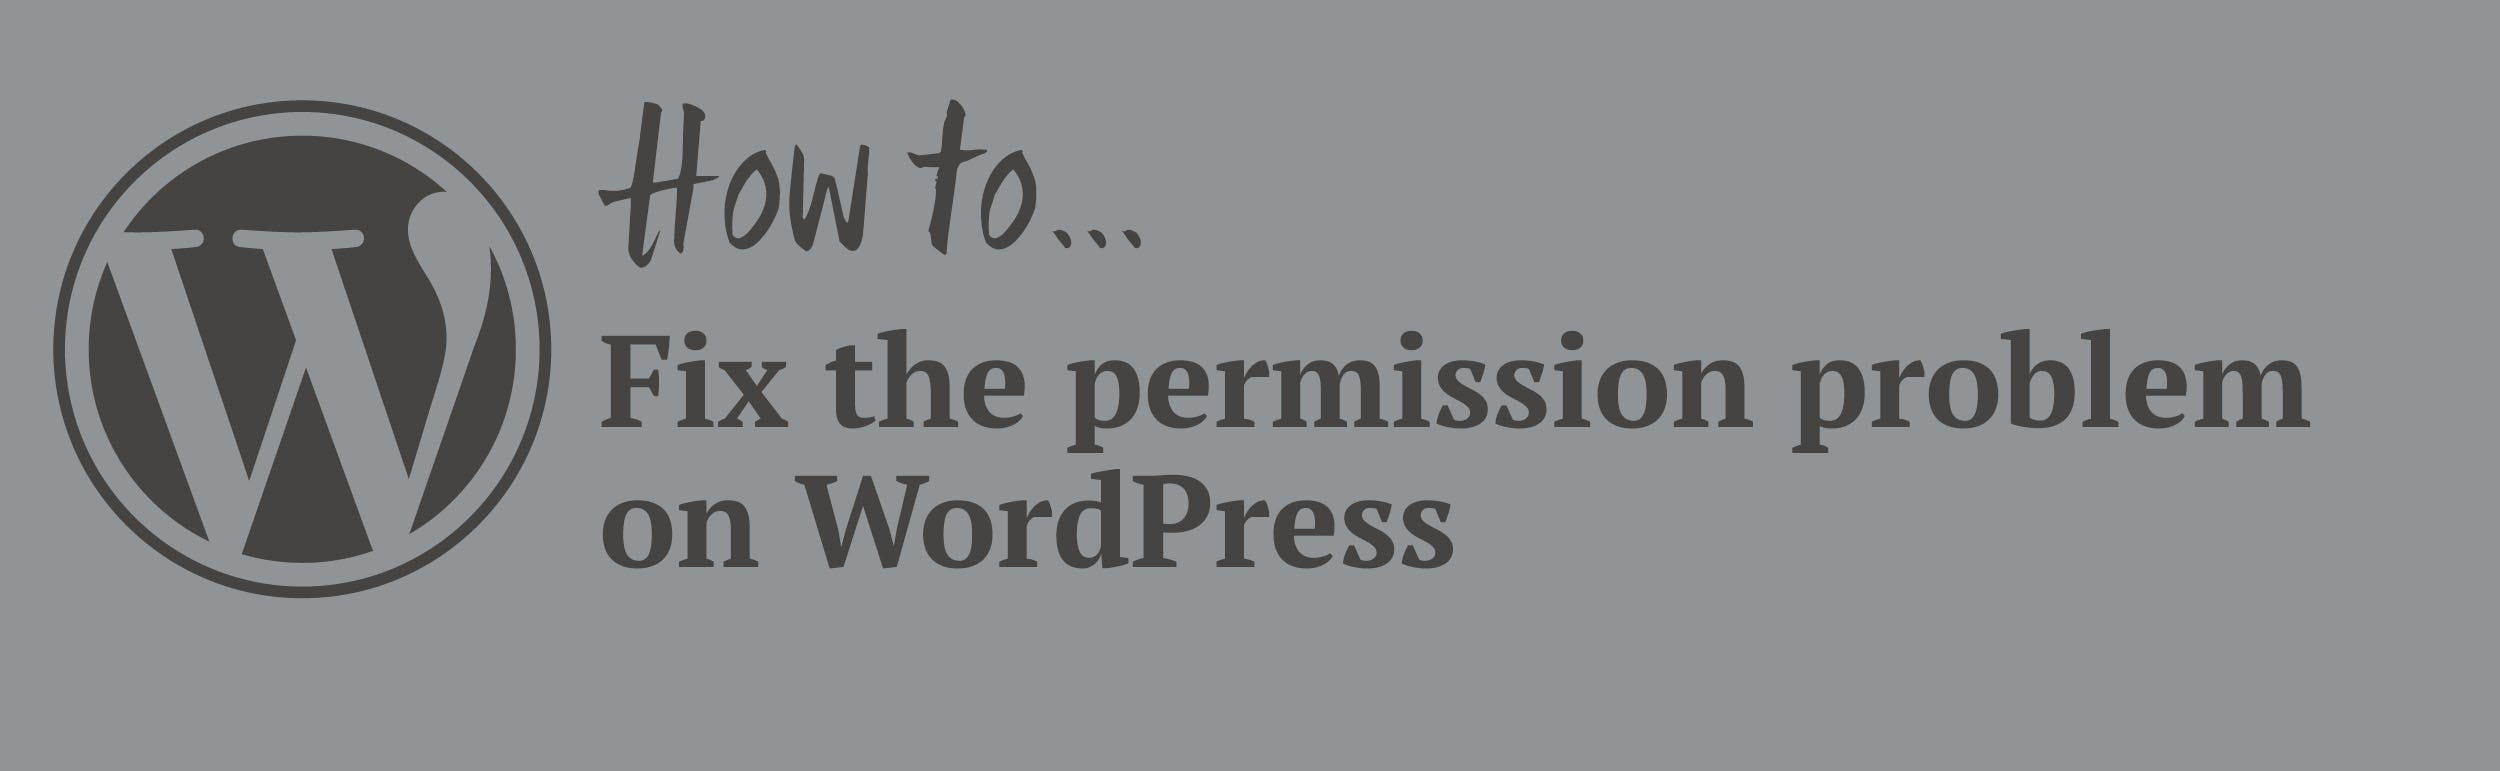 Xampp Wordpress Permission Problem On Mac By Idler Wordblock Medium